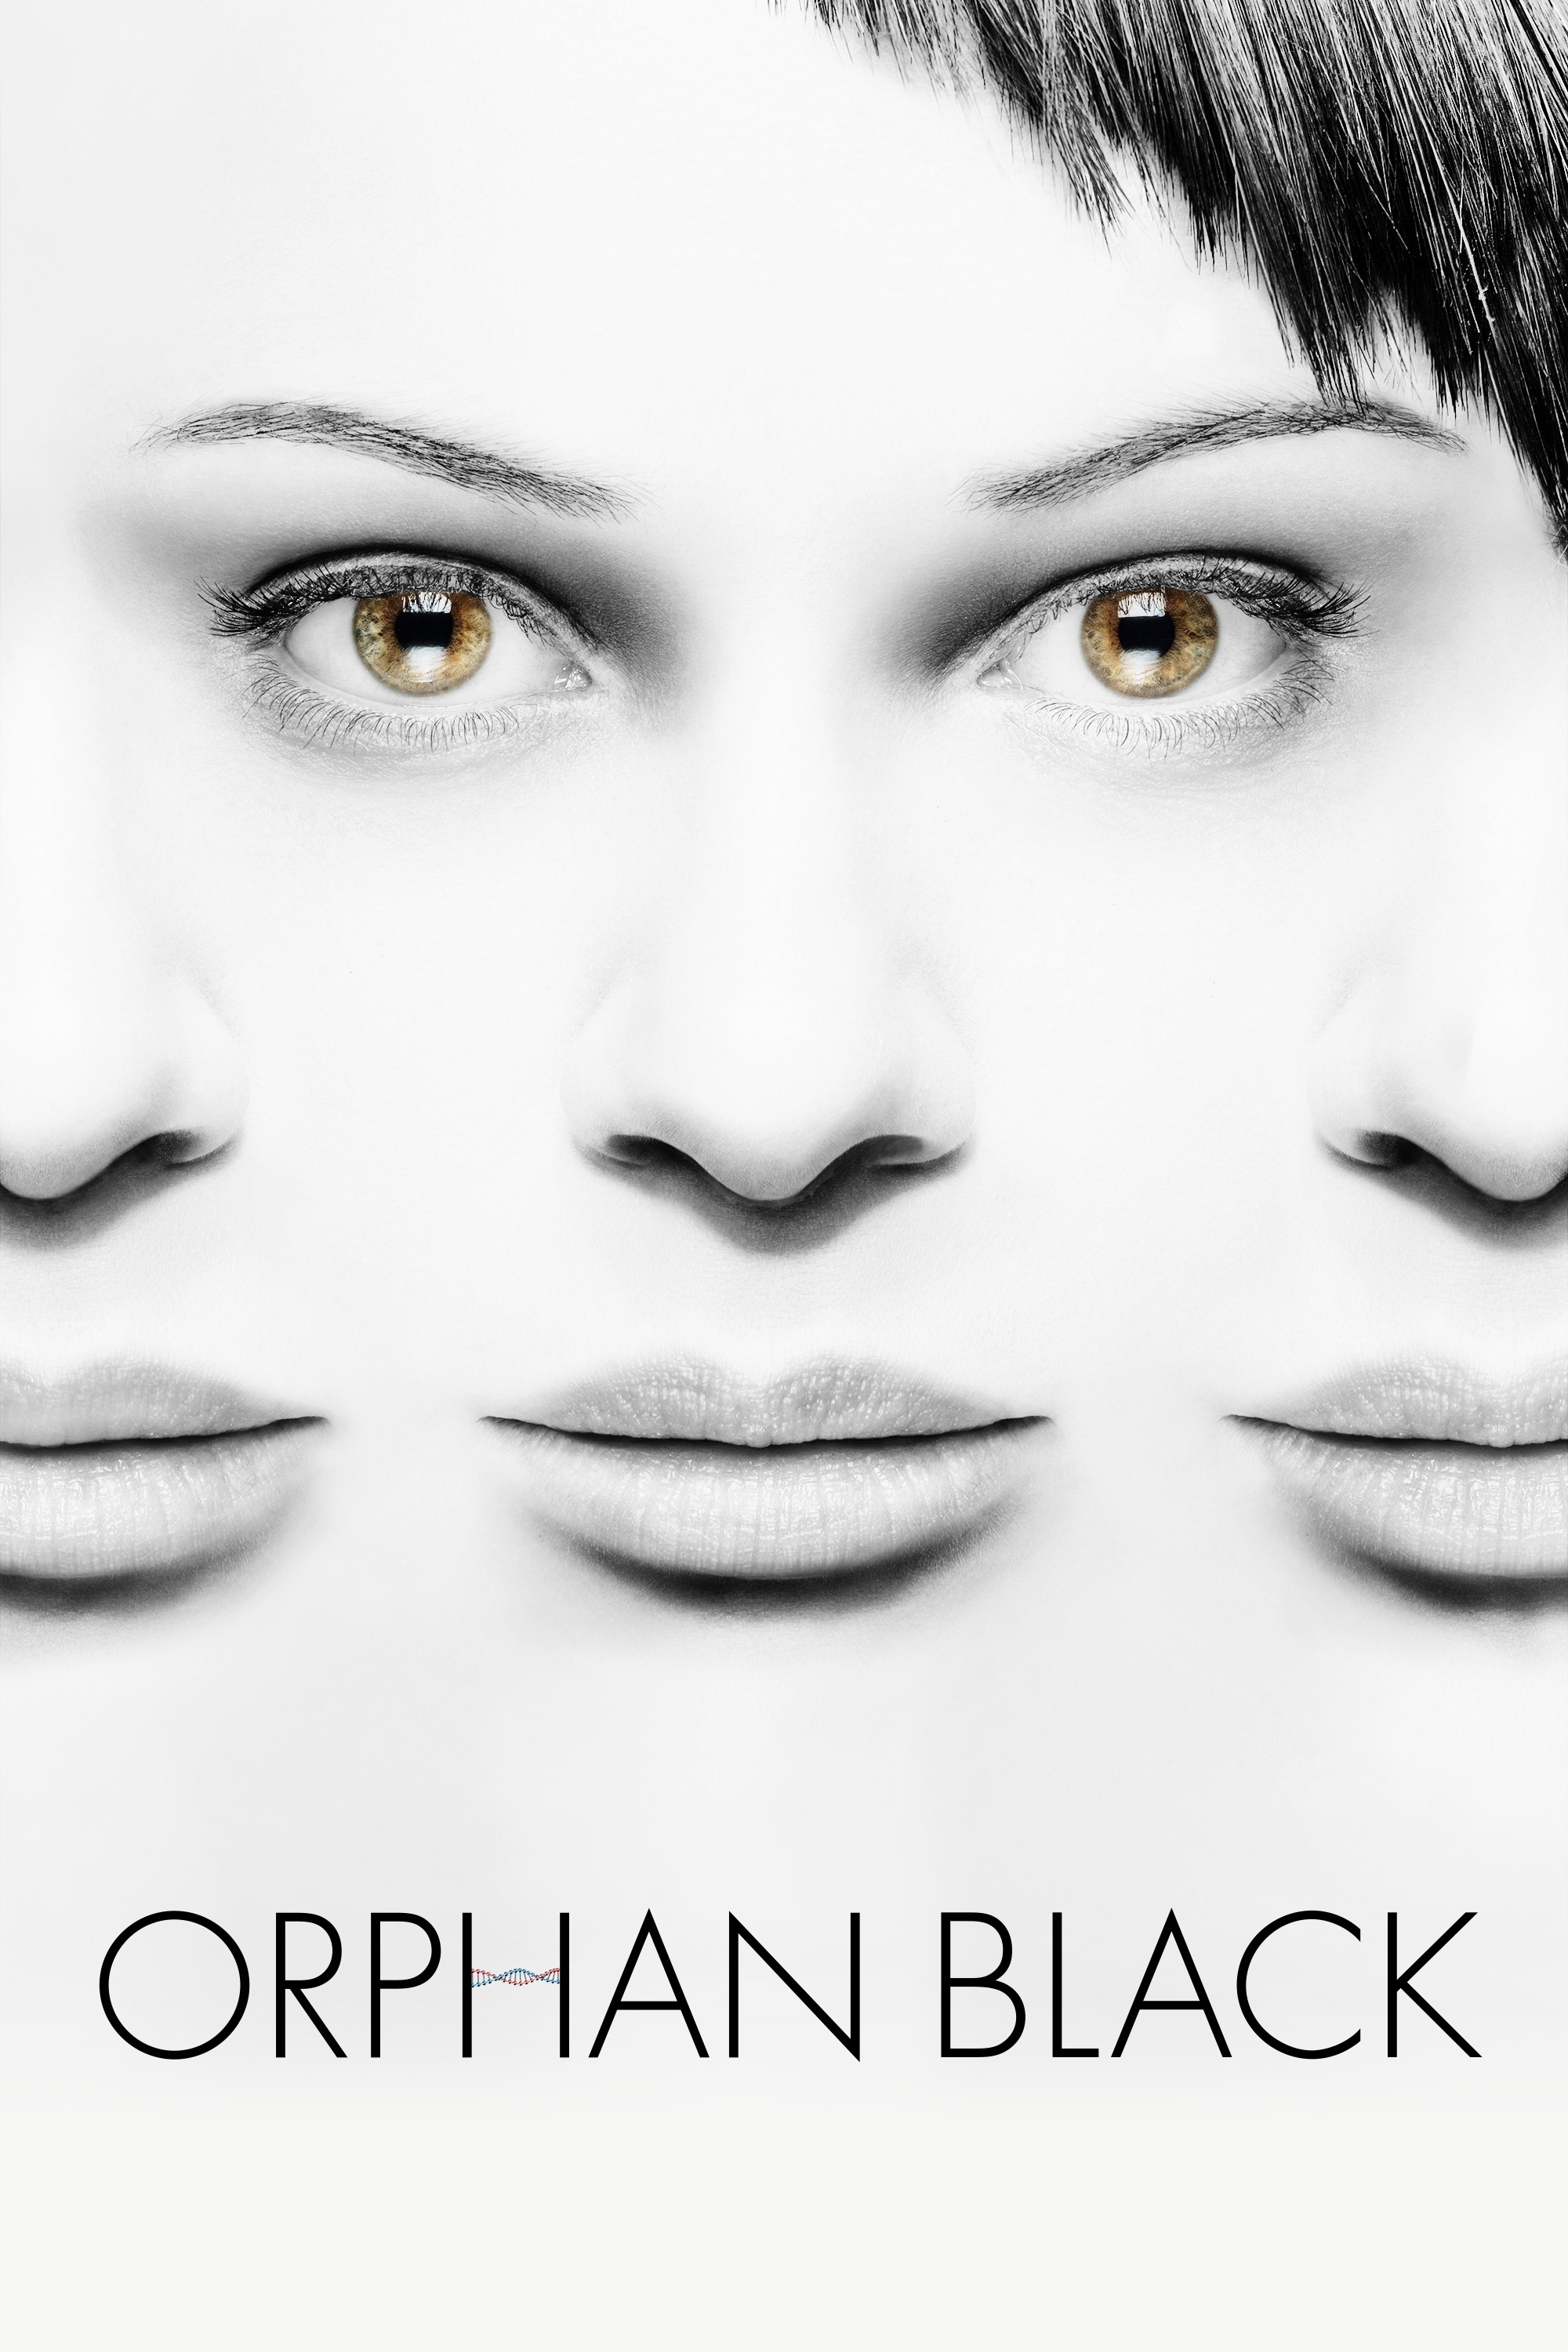 Orphan-Black-S1_2x3